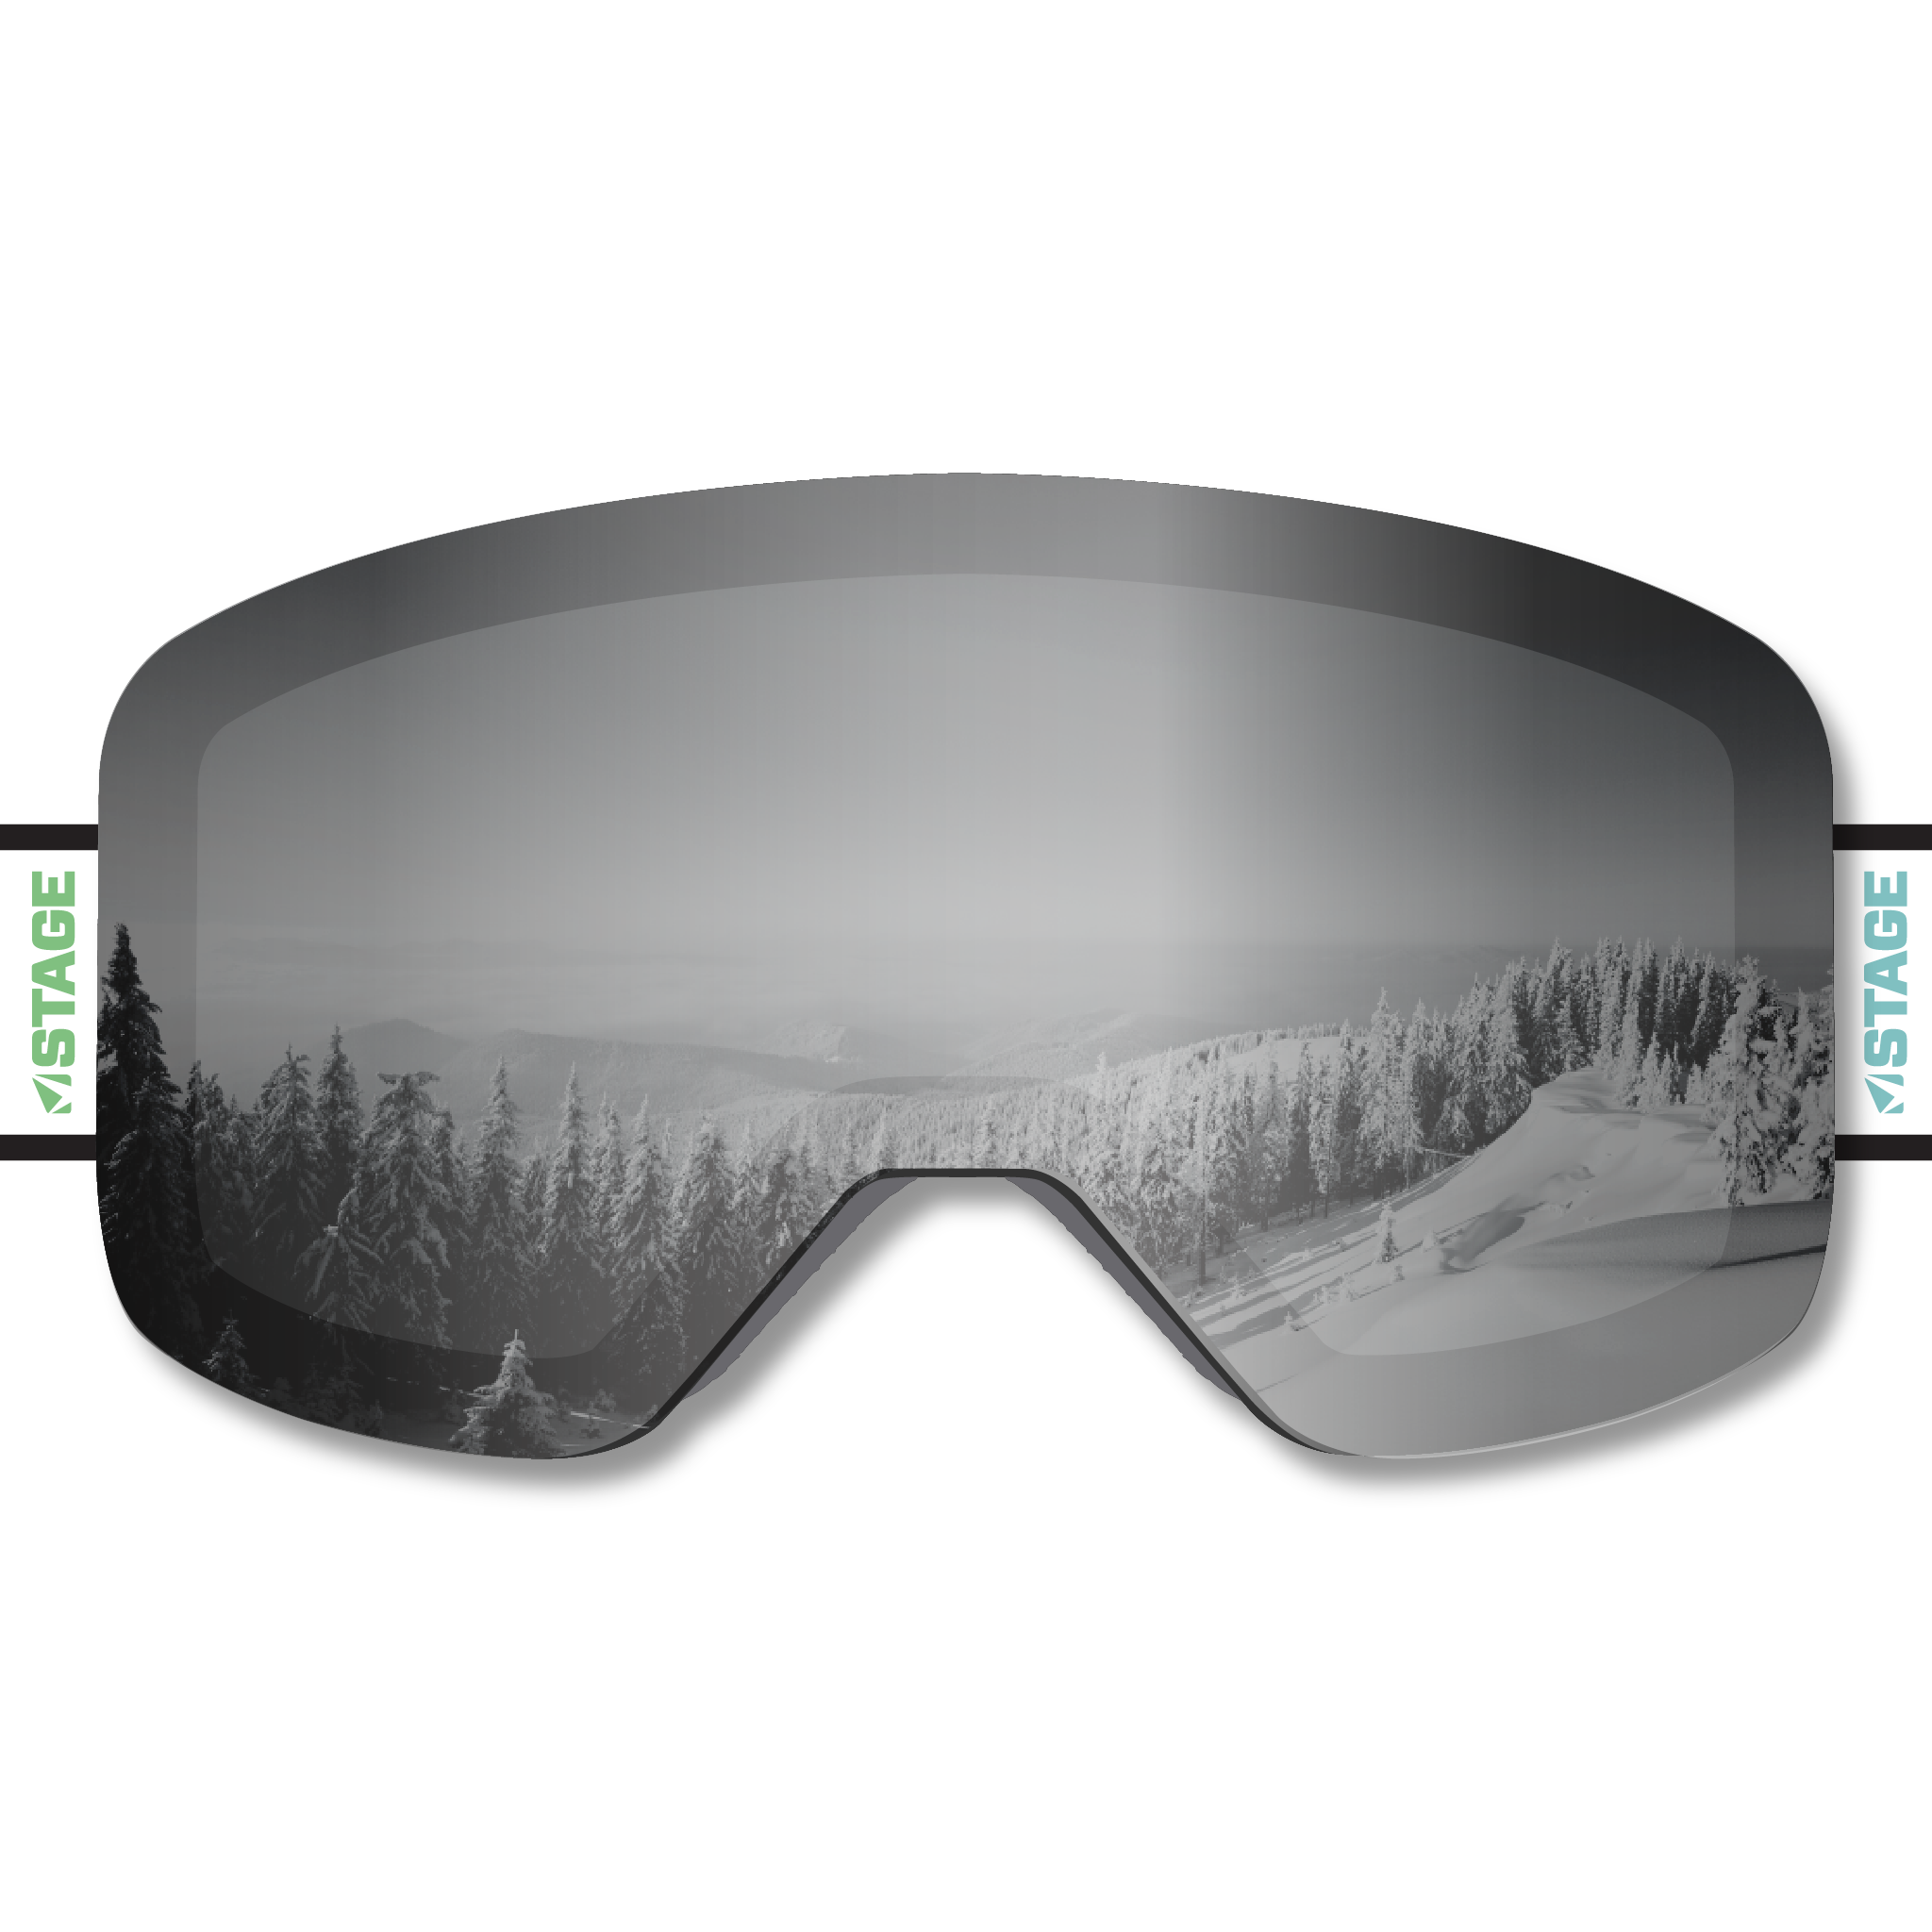 Cottonwood Canyons Foundation Frameless Prop Ski Goggle - Mirror Chrome Smoke Lens